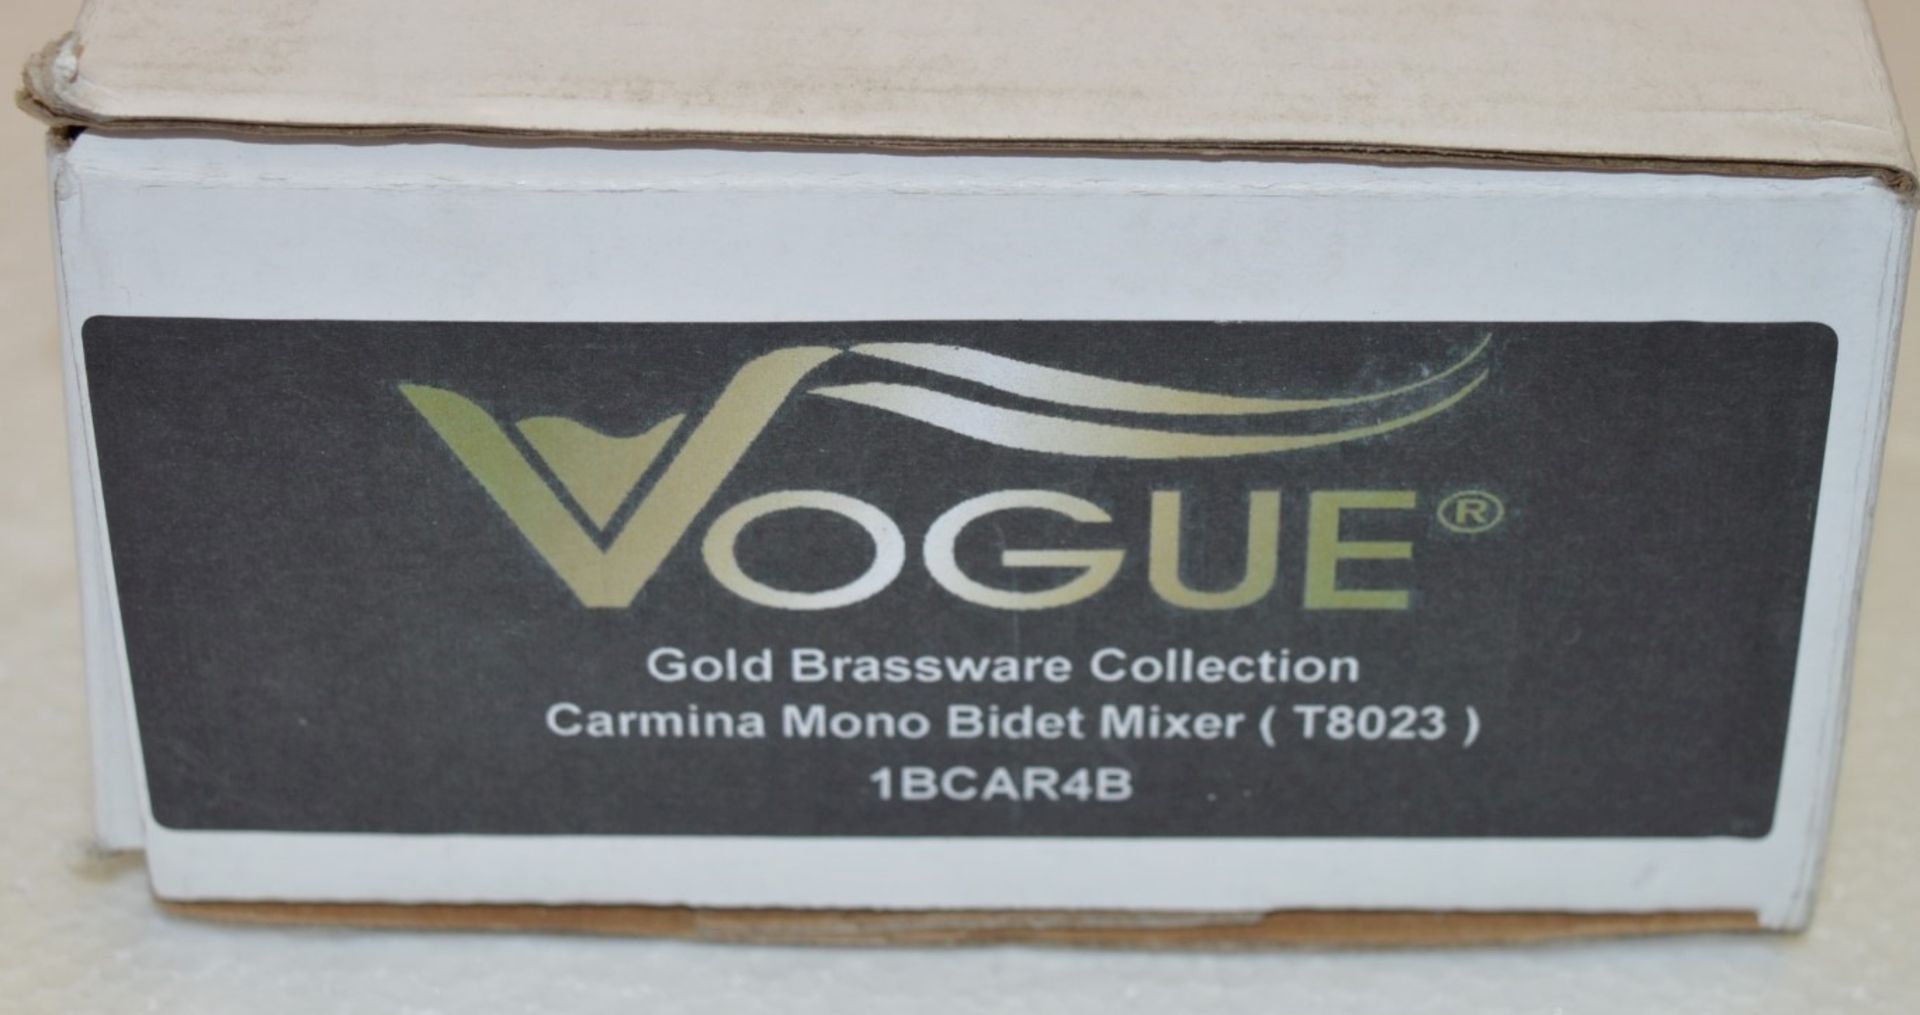 1 x Vogue Carmina Mono Bidet Mixer Tap - Vogue Bathrooms Gold Brassware Collection - High Quality - Image 4 of 7